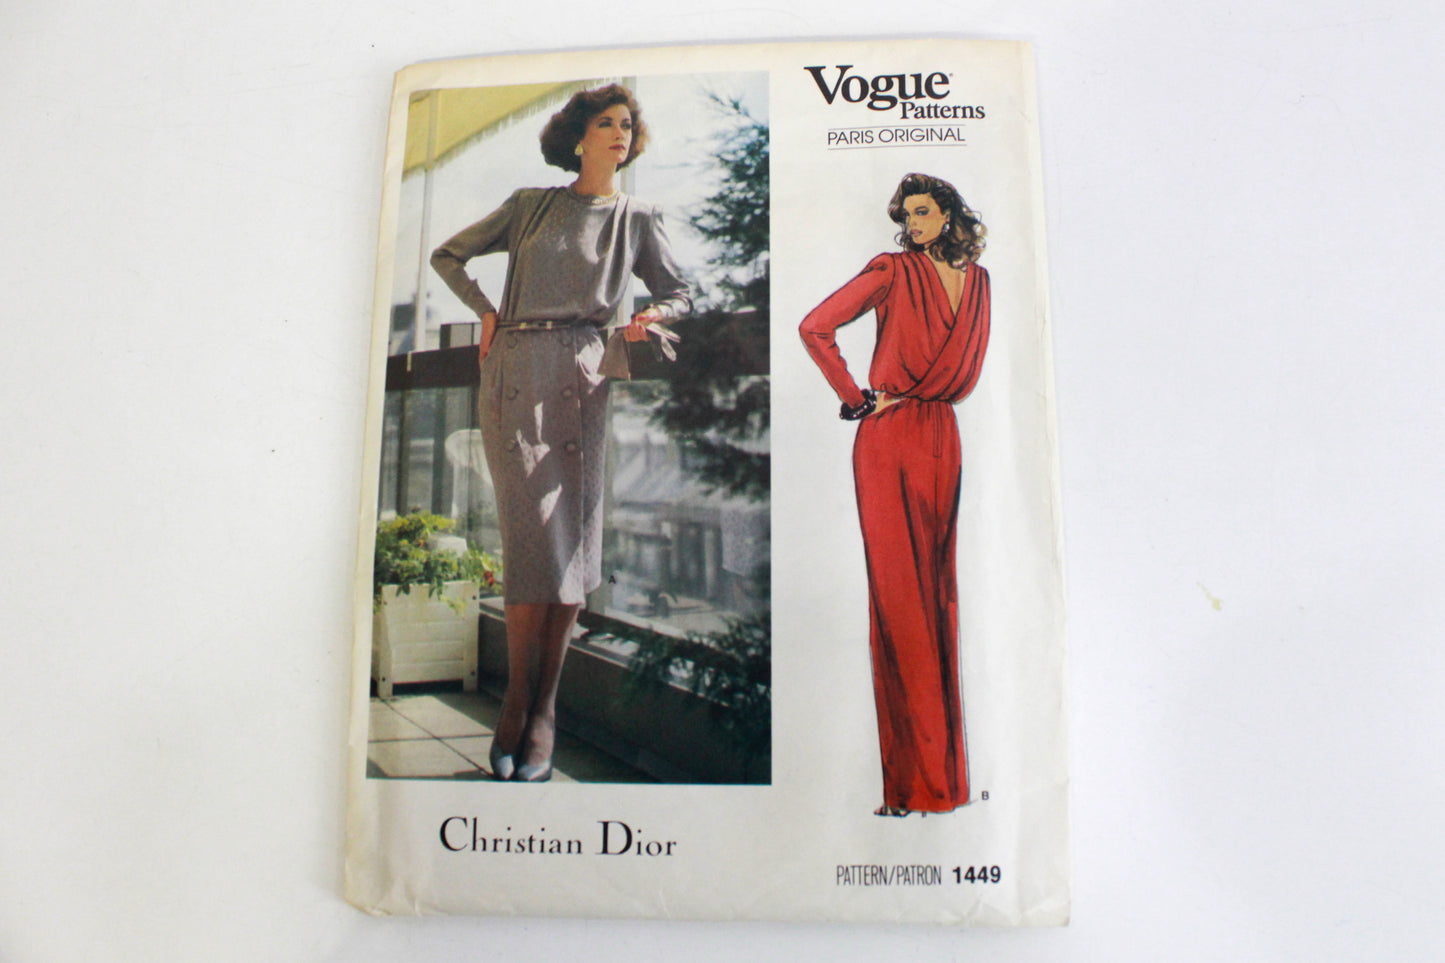 1980s dress vogue paris original 1449 sewing pattern christian dior 